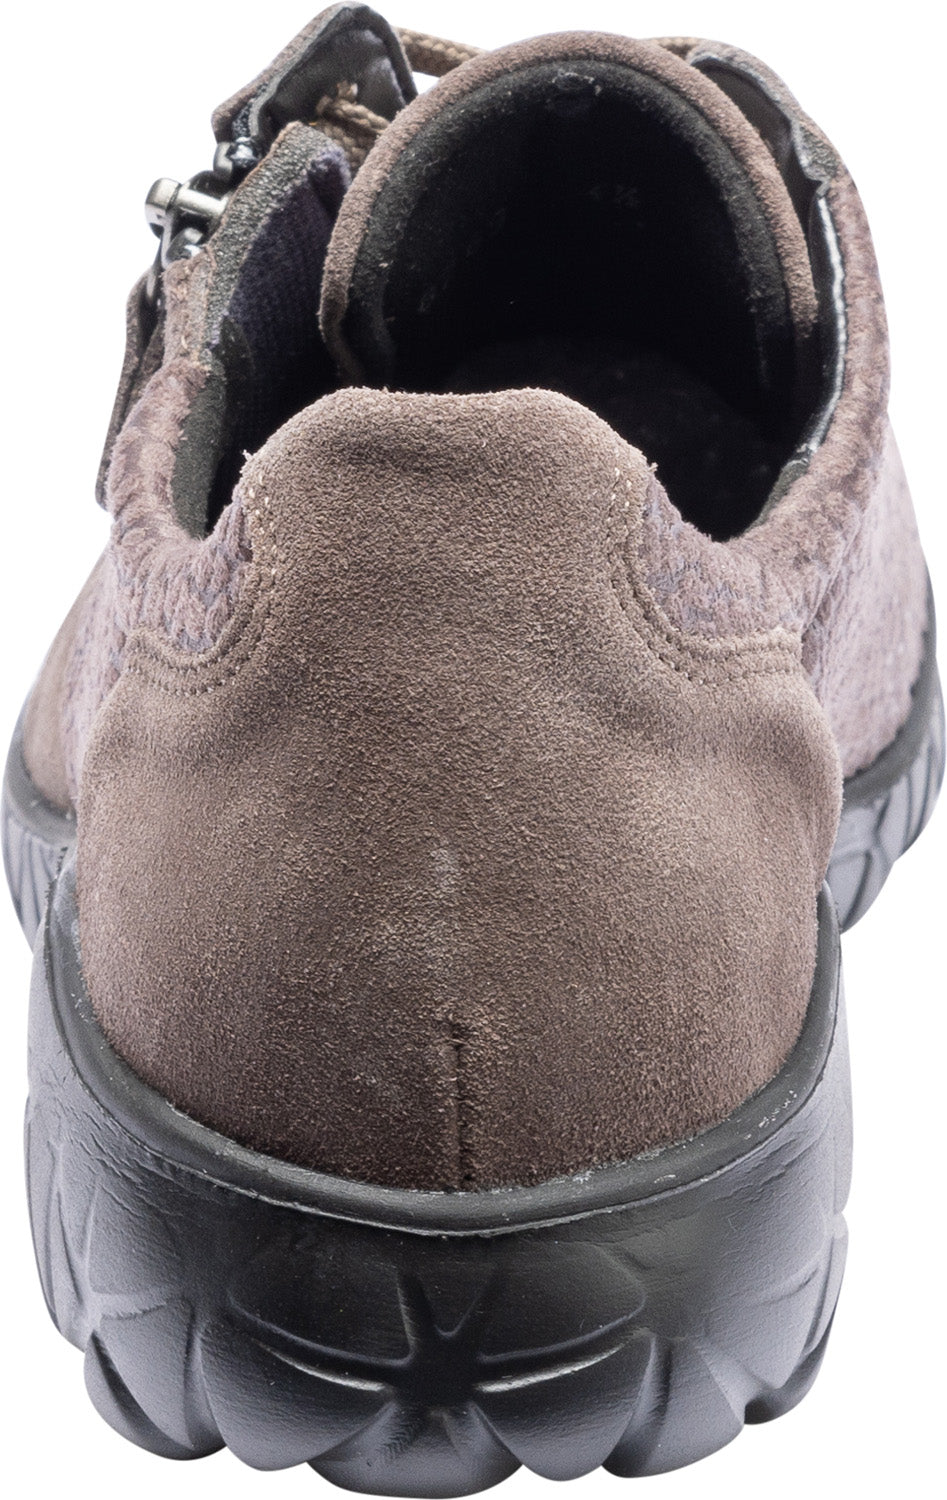 Waldlaufer H89001 218 190 Havy Soft Ladies Mouse Brown Leather & Textile Zip & Lace Shoes